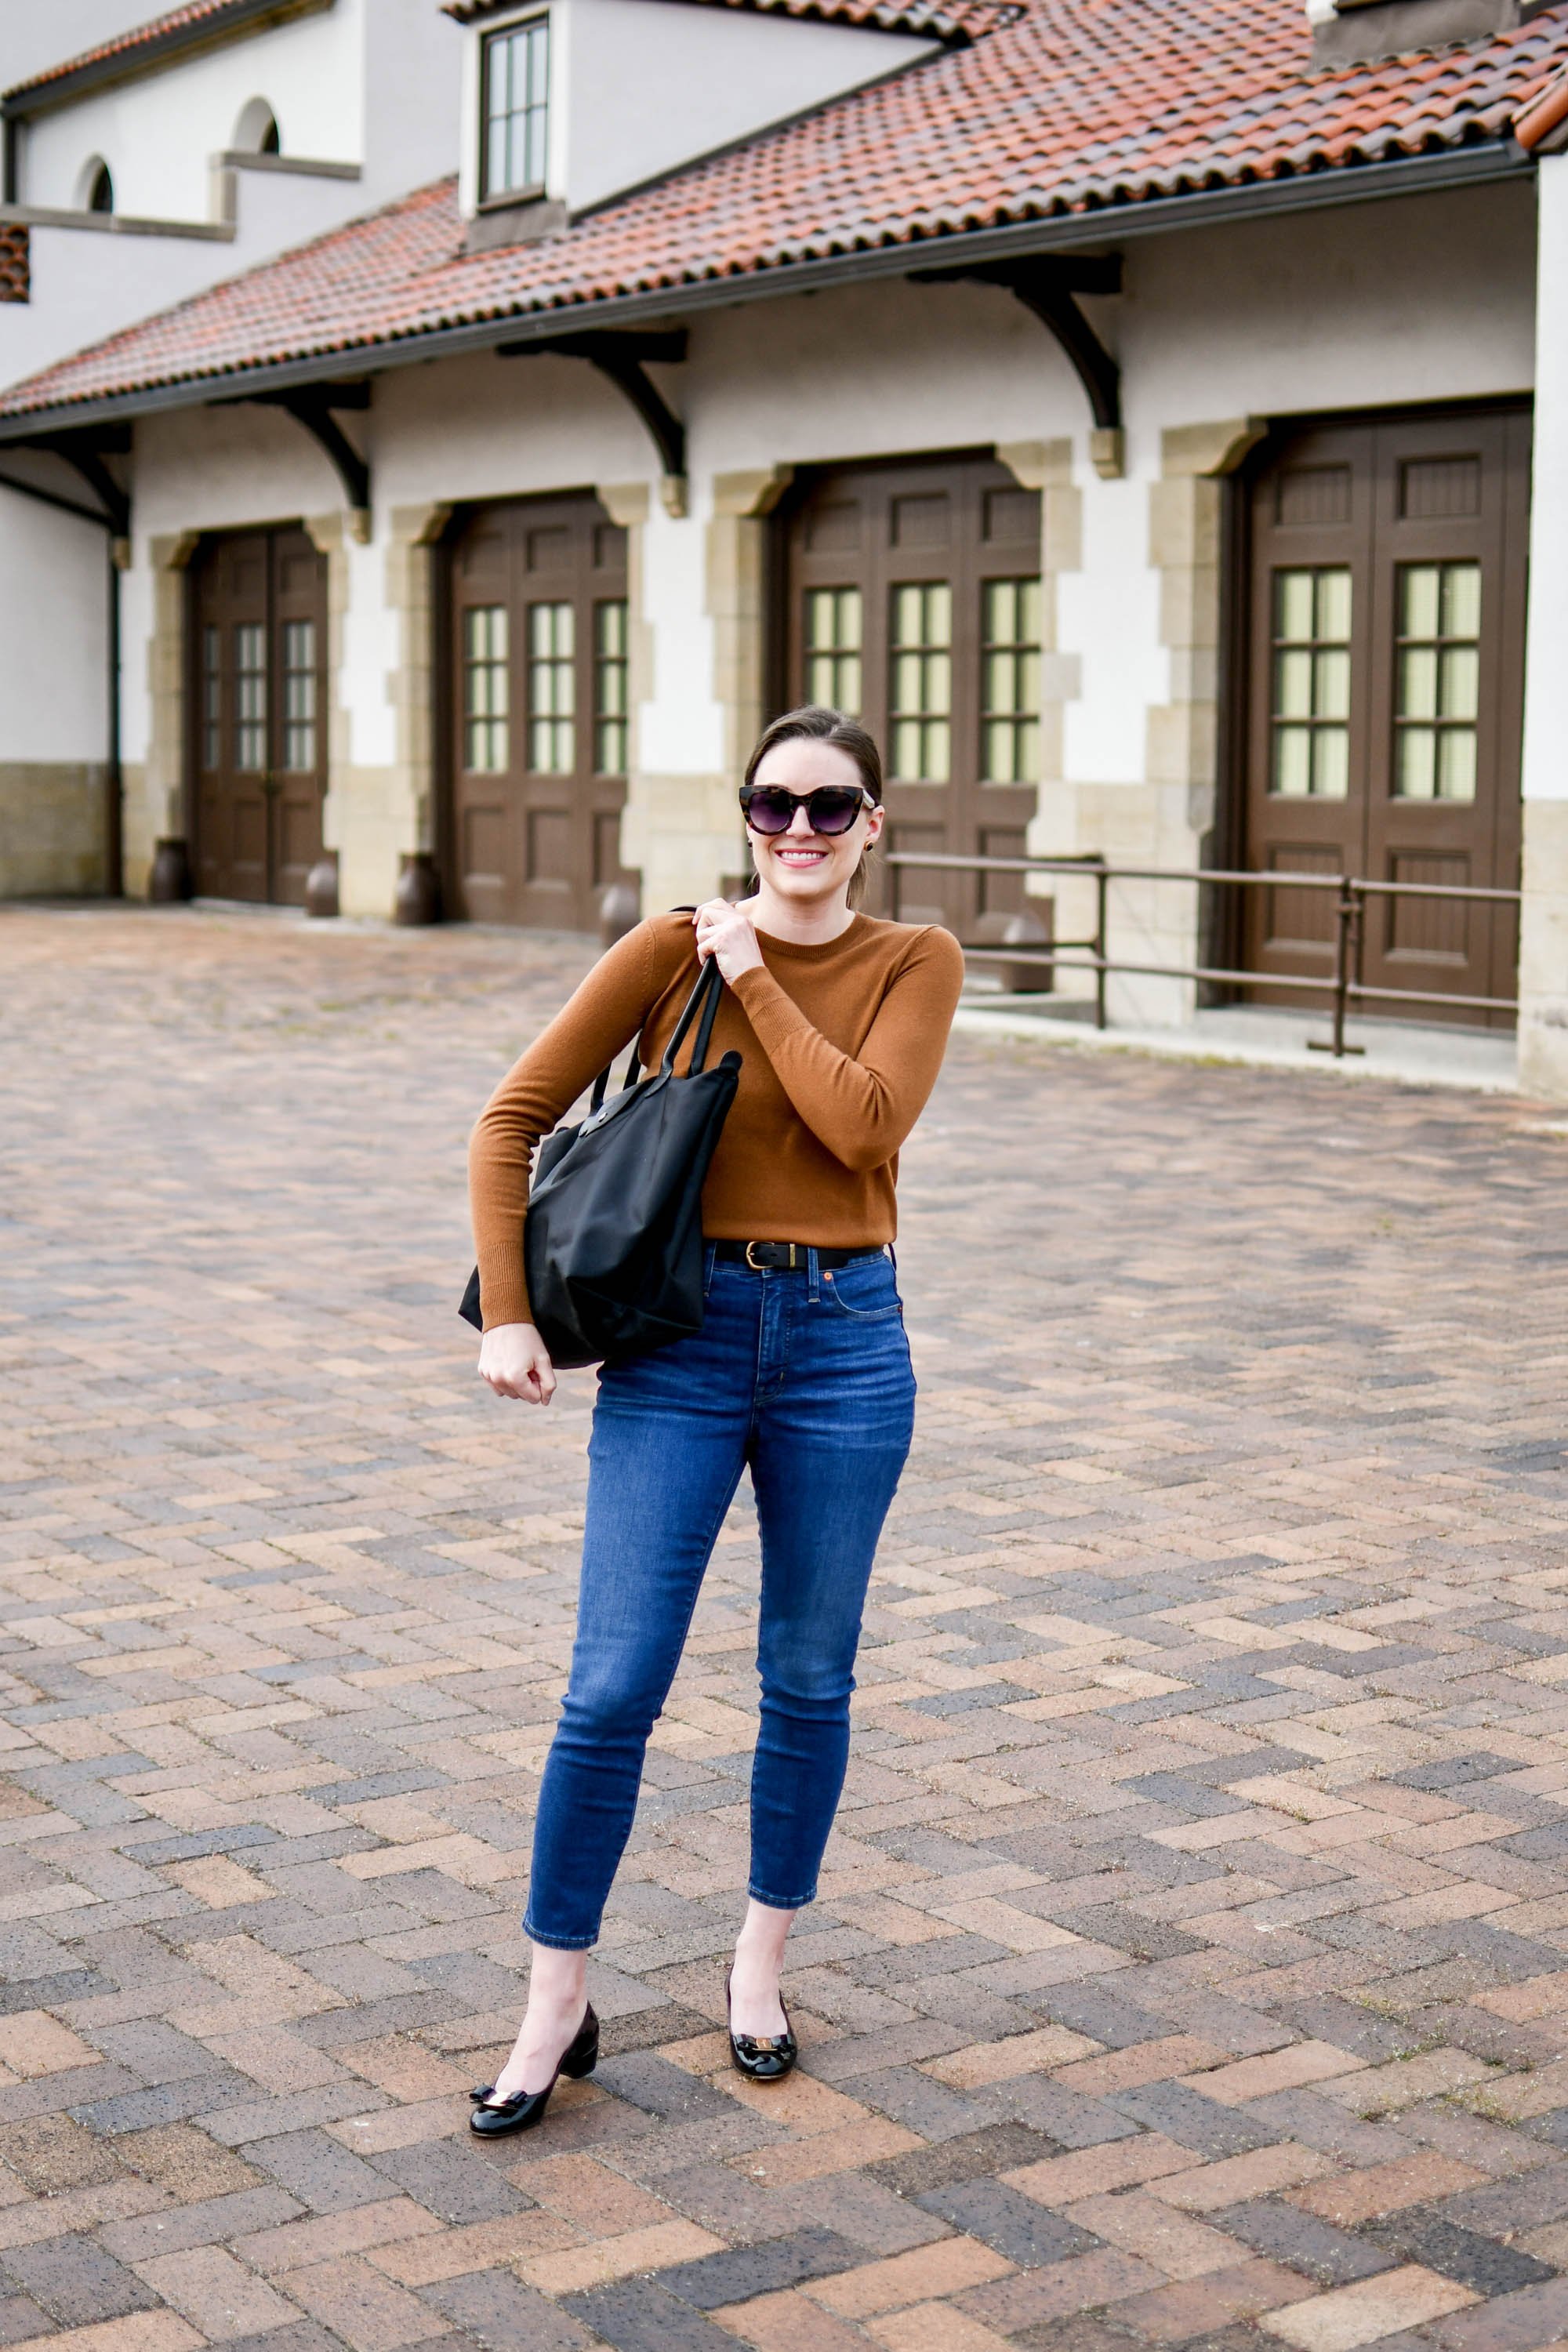 Grad School Interview Outfit Idea: Dress Up a Simple Sweater + Dark Wash Jeans | Cotton Cashmere Cat Hair